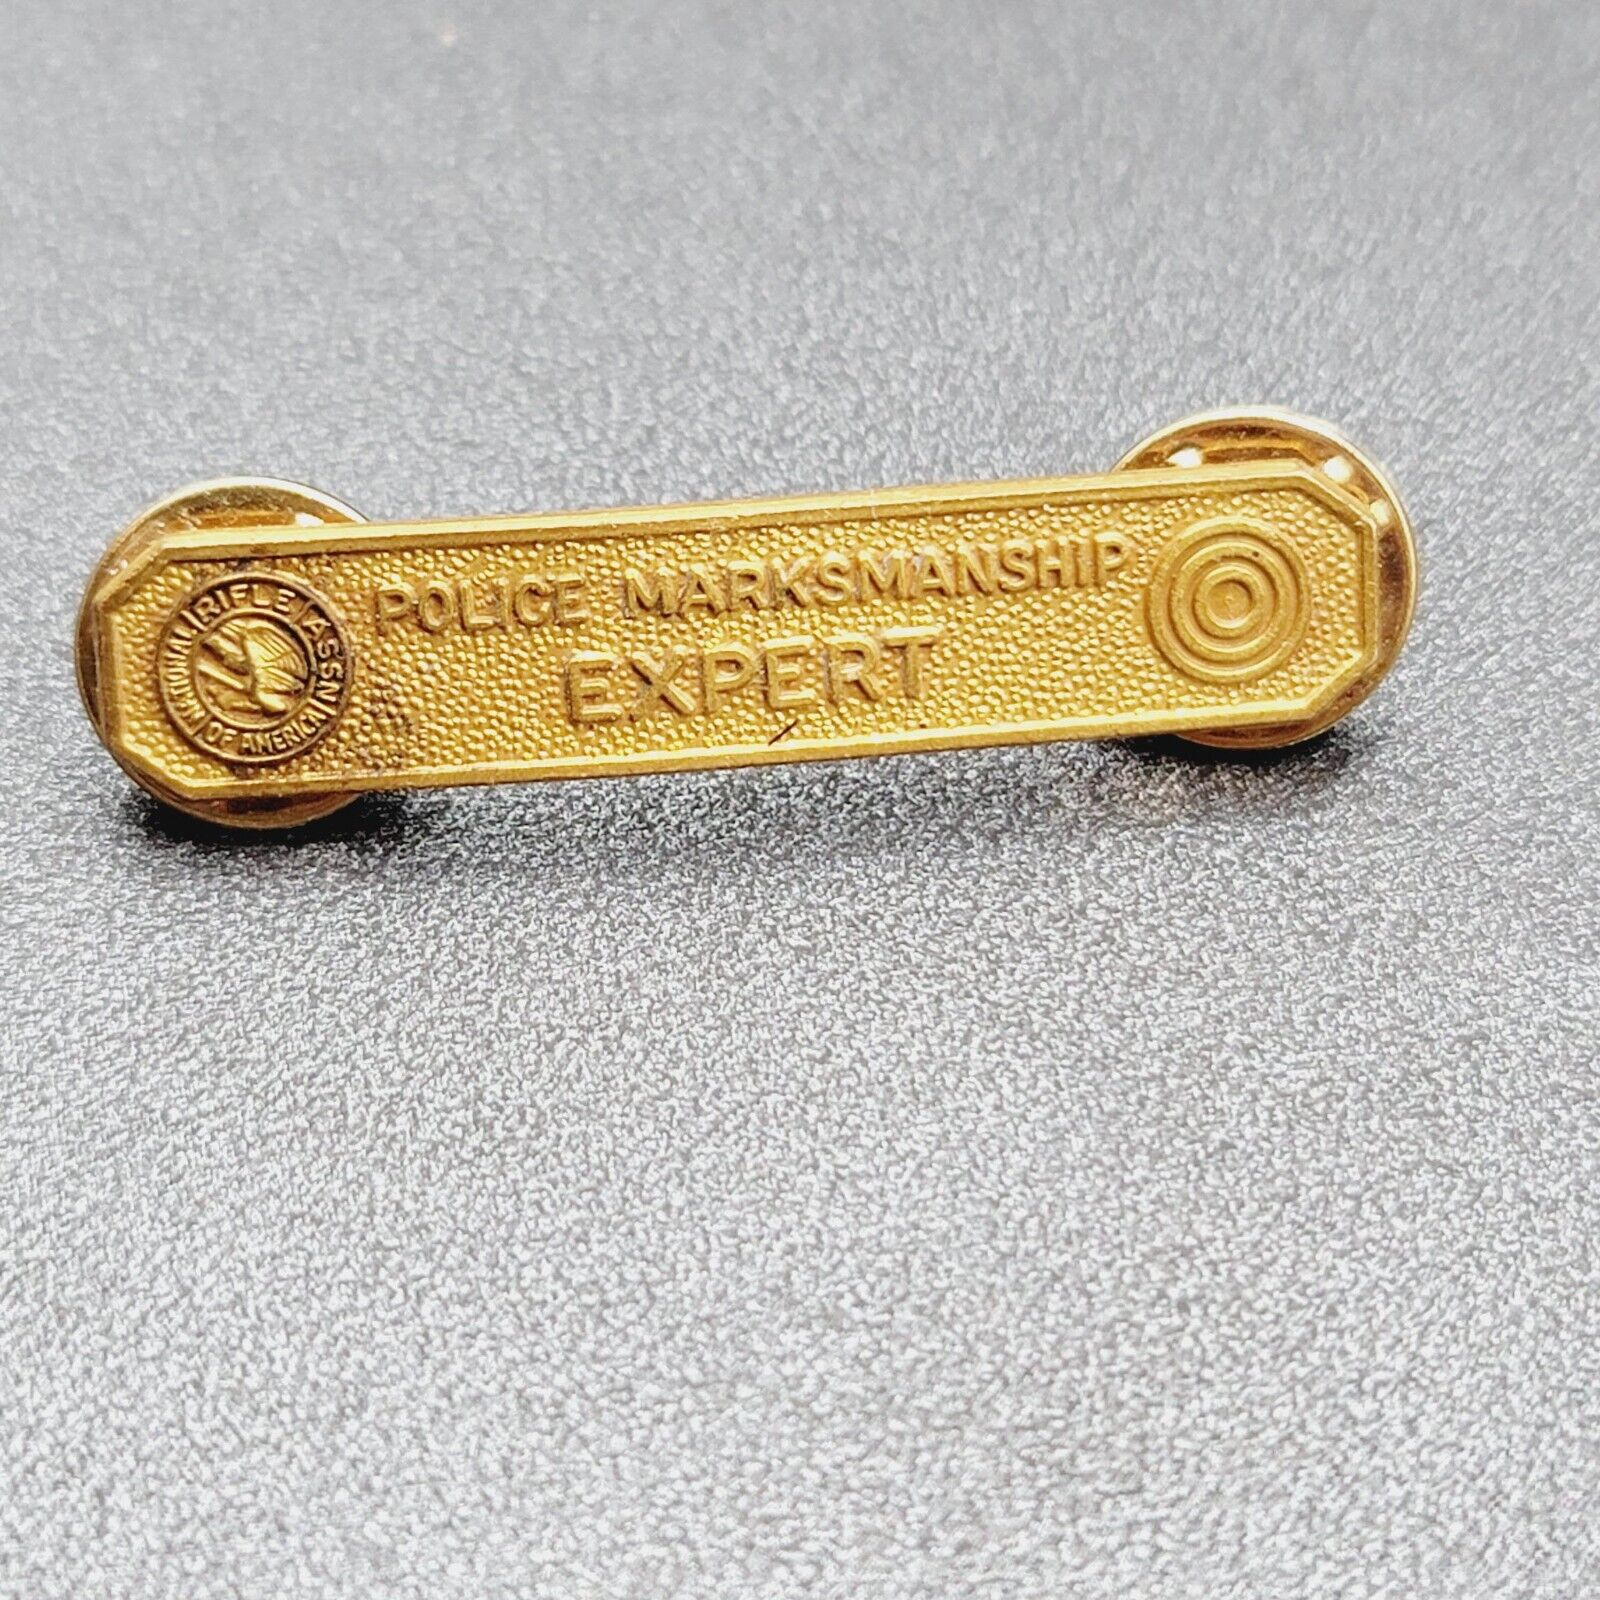 Vintage NRA Police Marksmanship Expert Pin Collectible Gold tone 1 5/8\